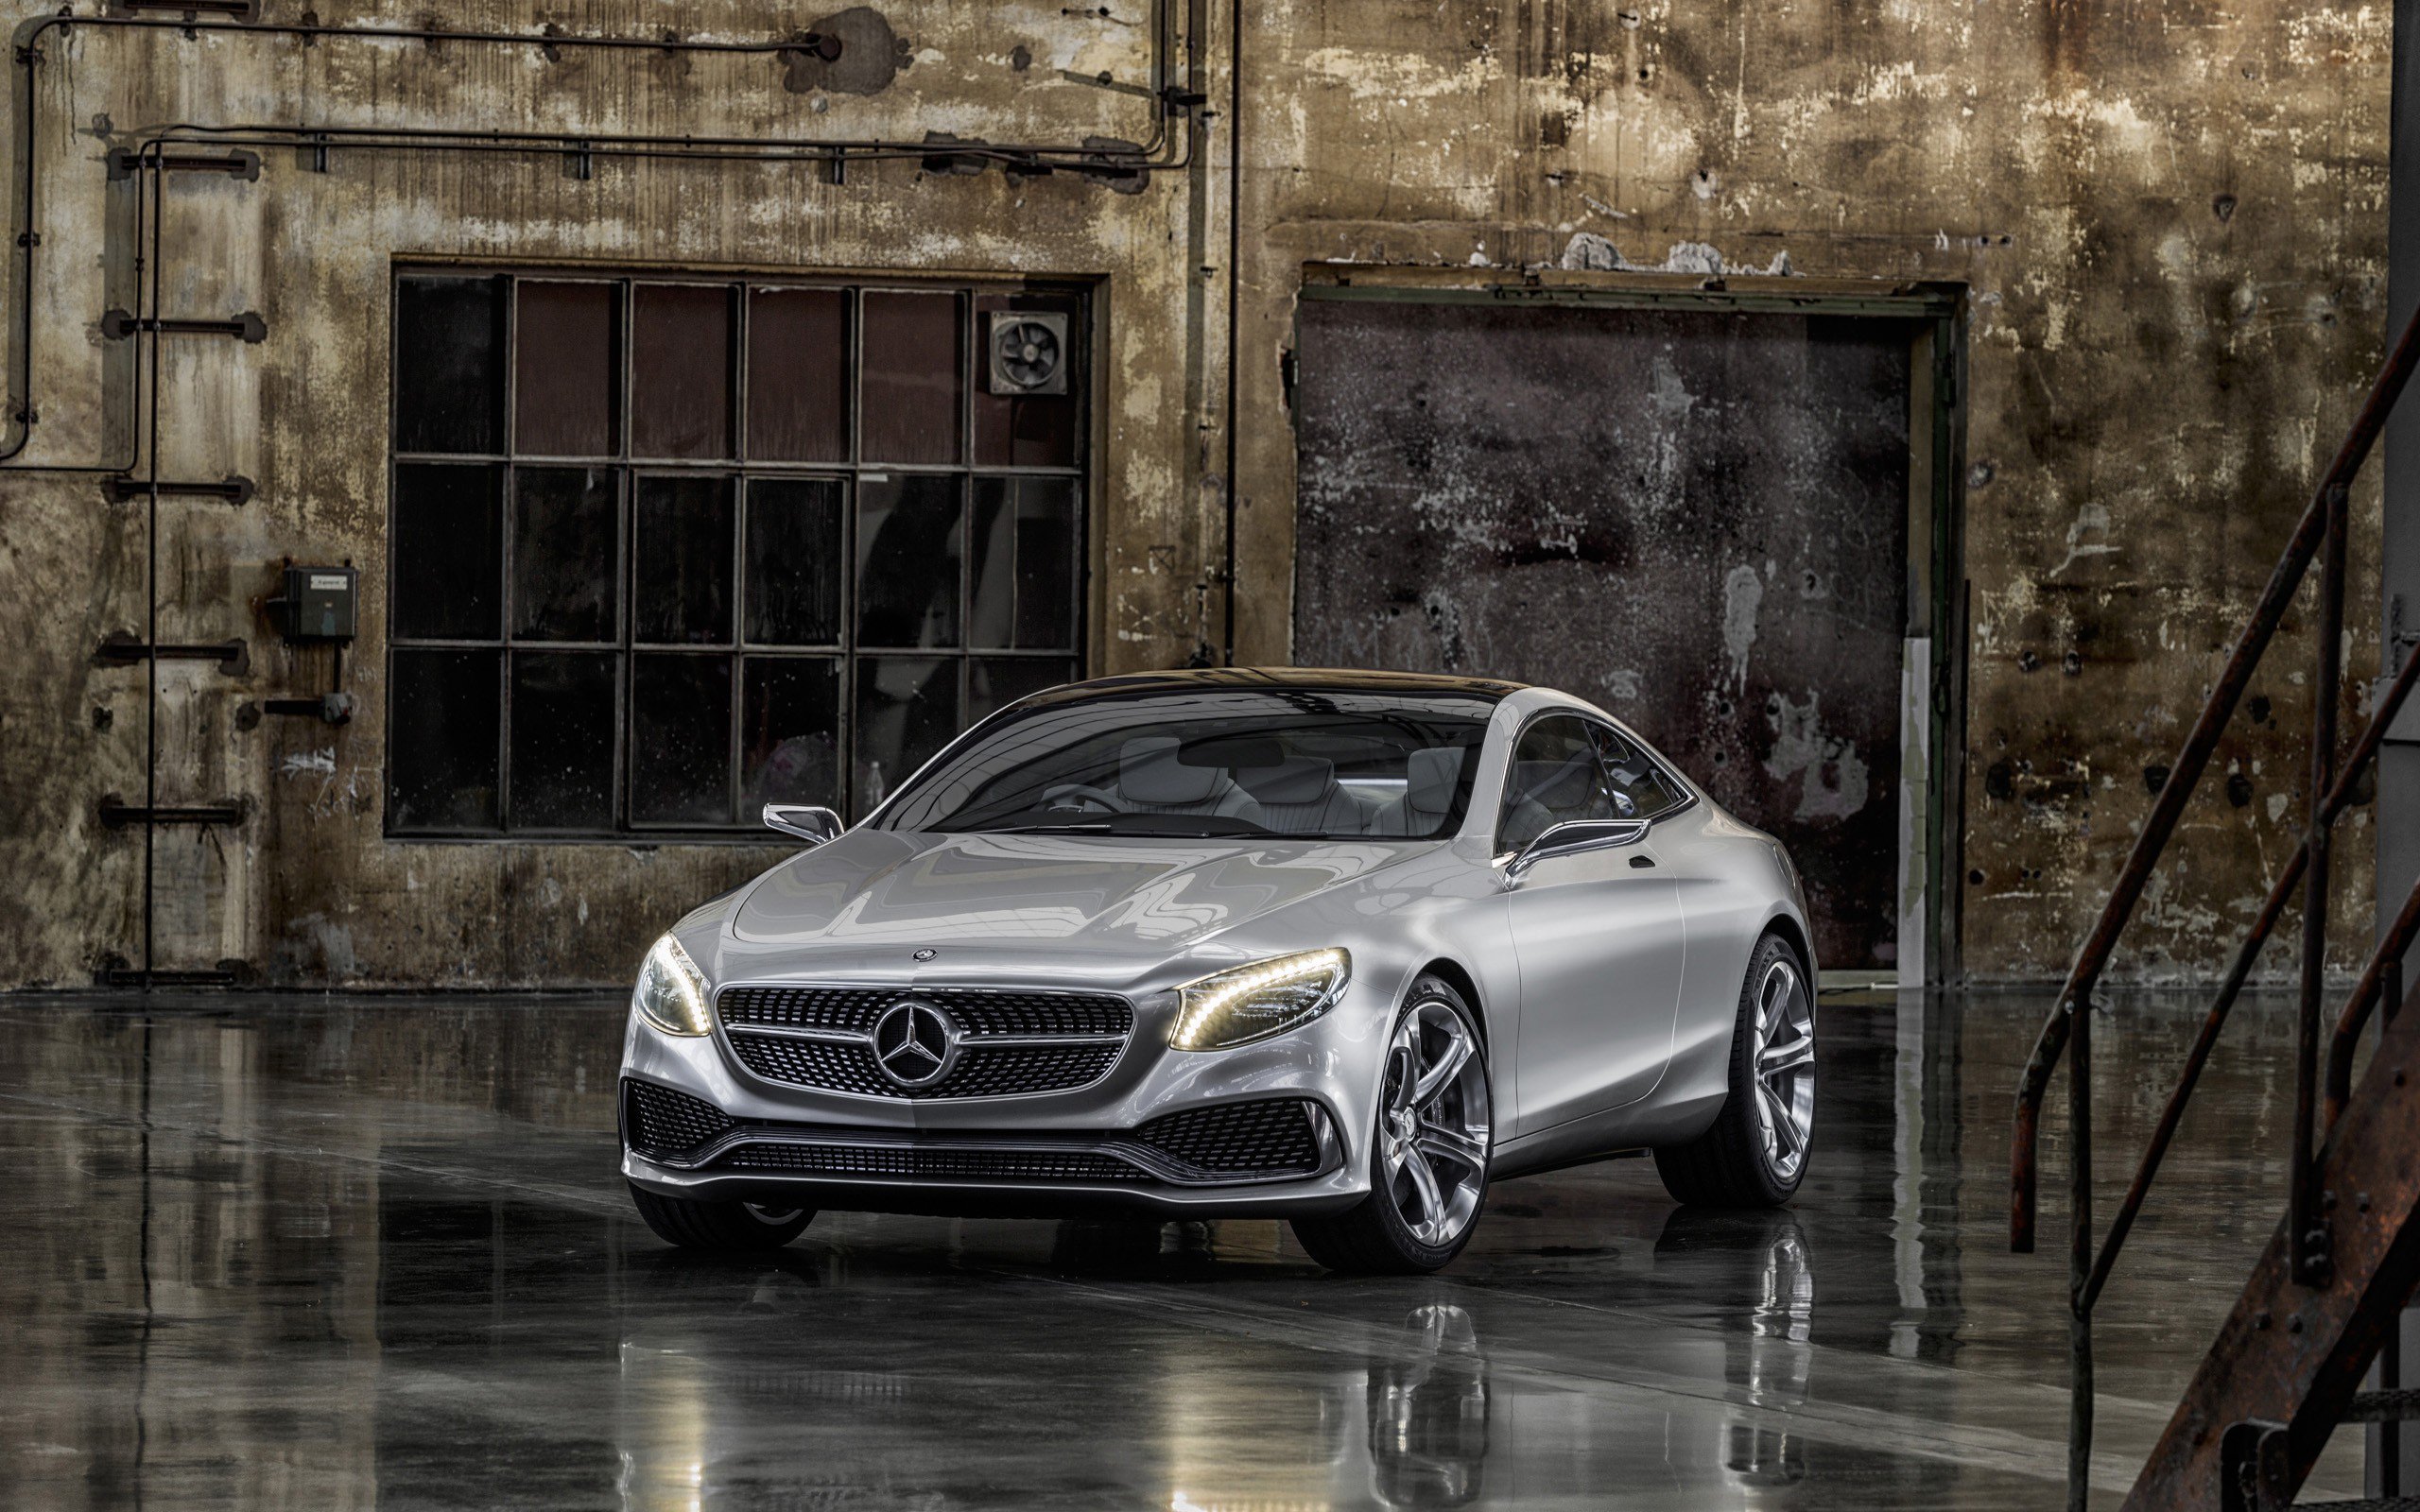 Mercedes Benz c Class Wallpapers, HD Mercedes Benz c Class Backgrounds,  Free Images Download